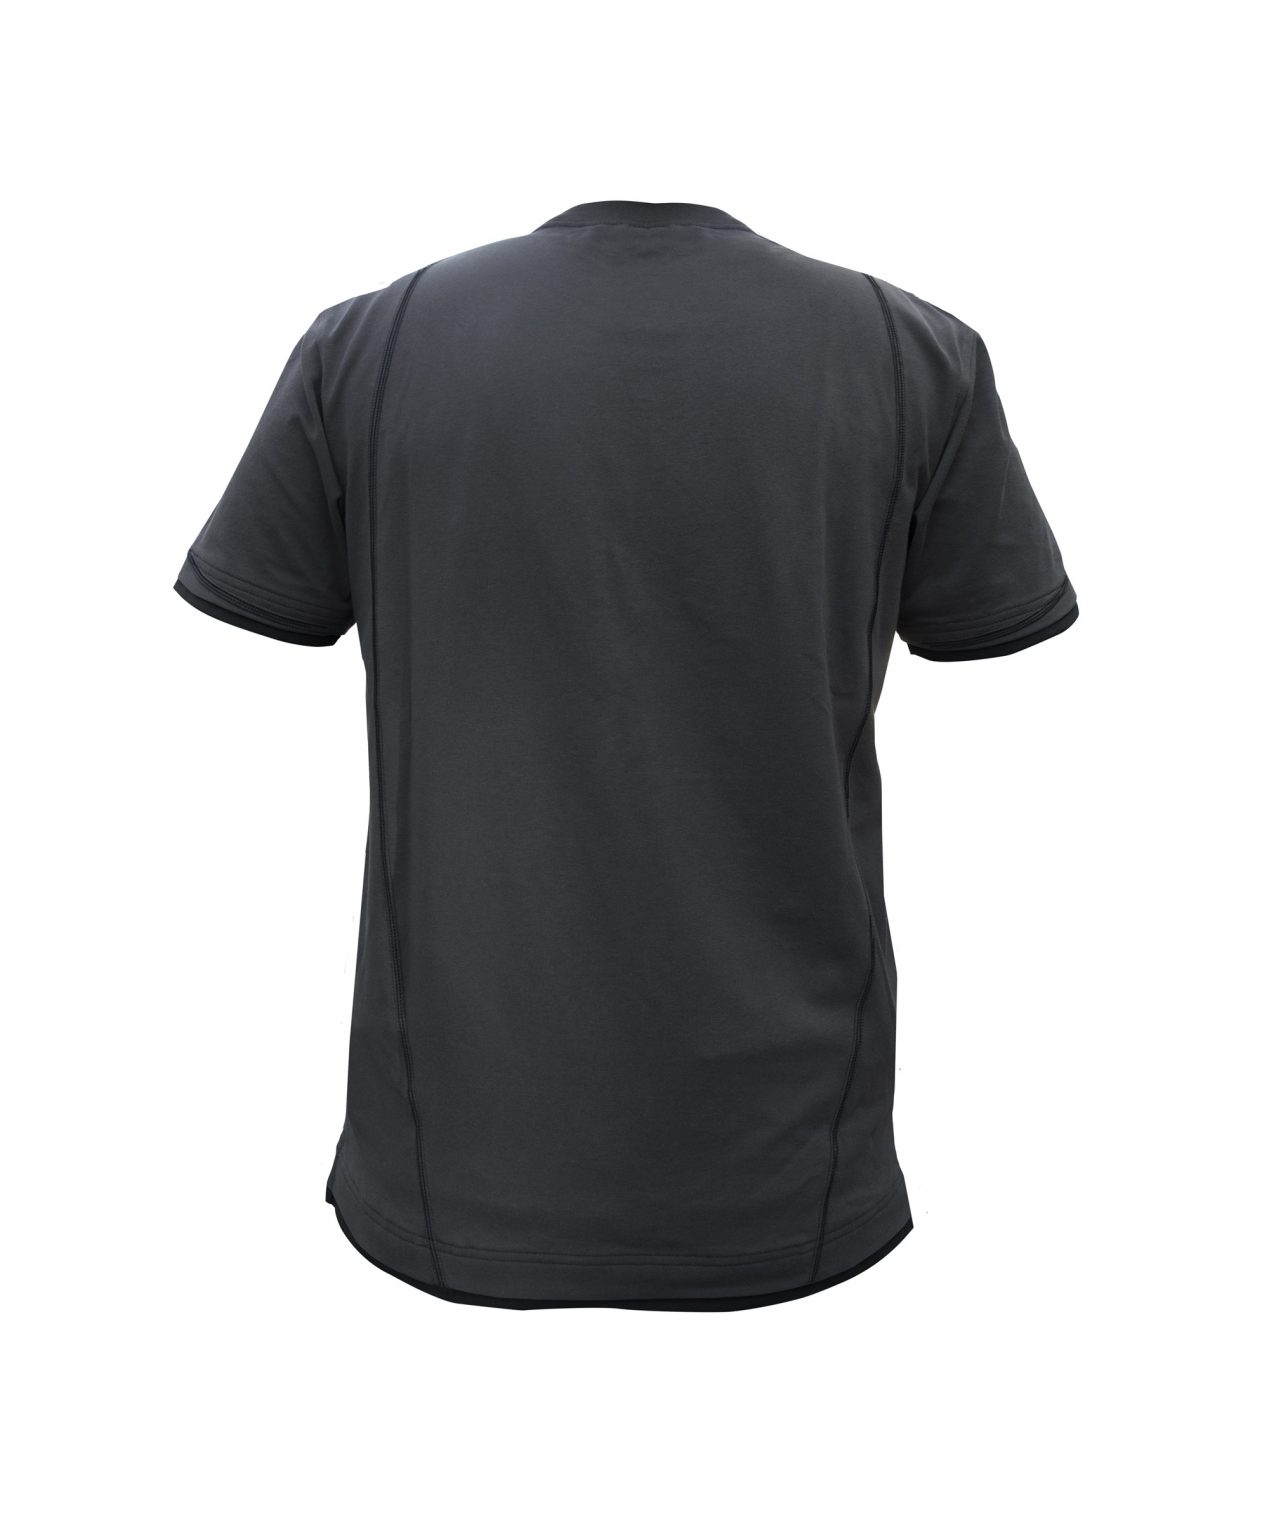 kinetic t shirt anthracite grey black back